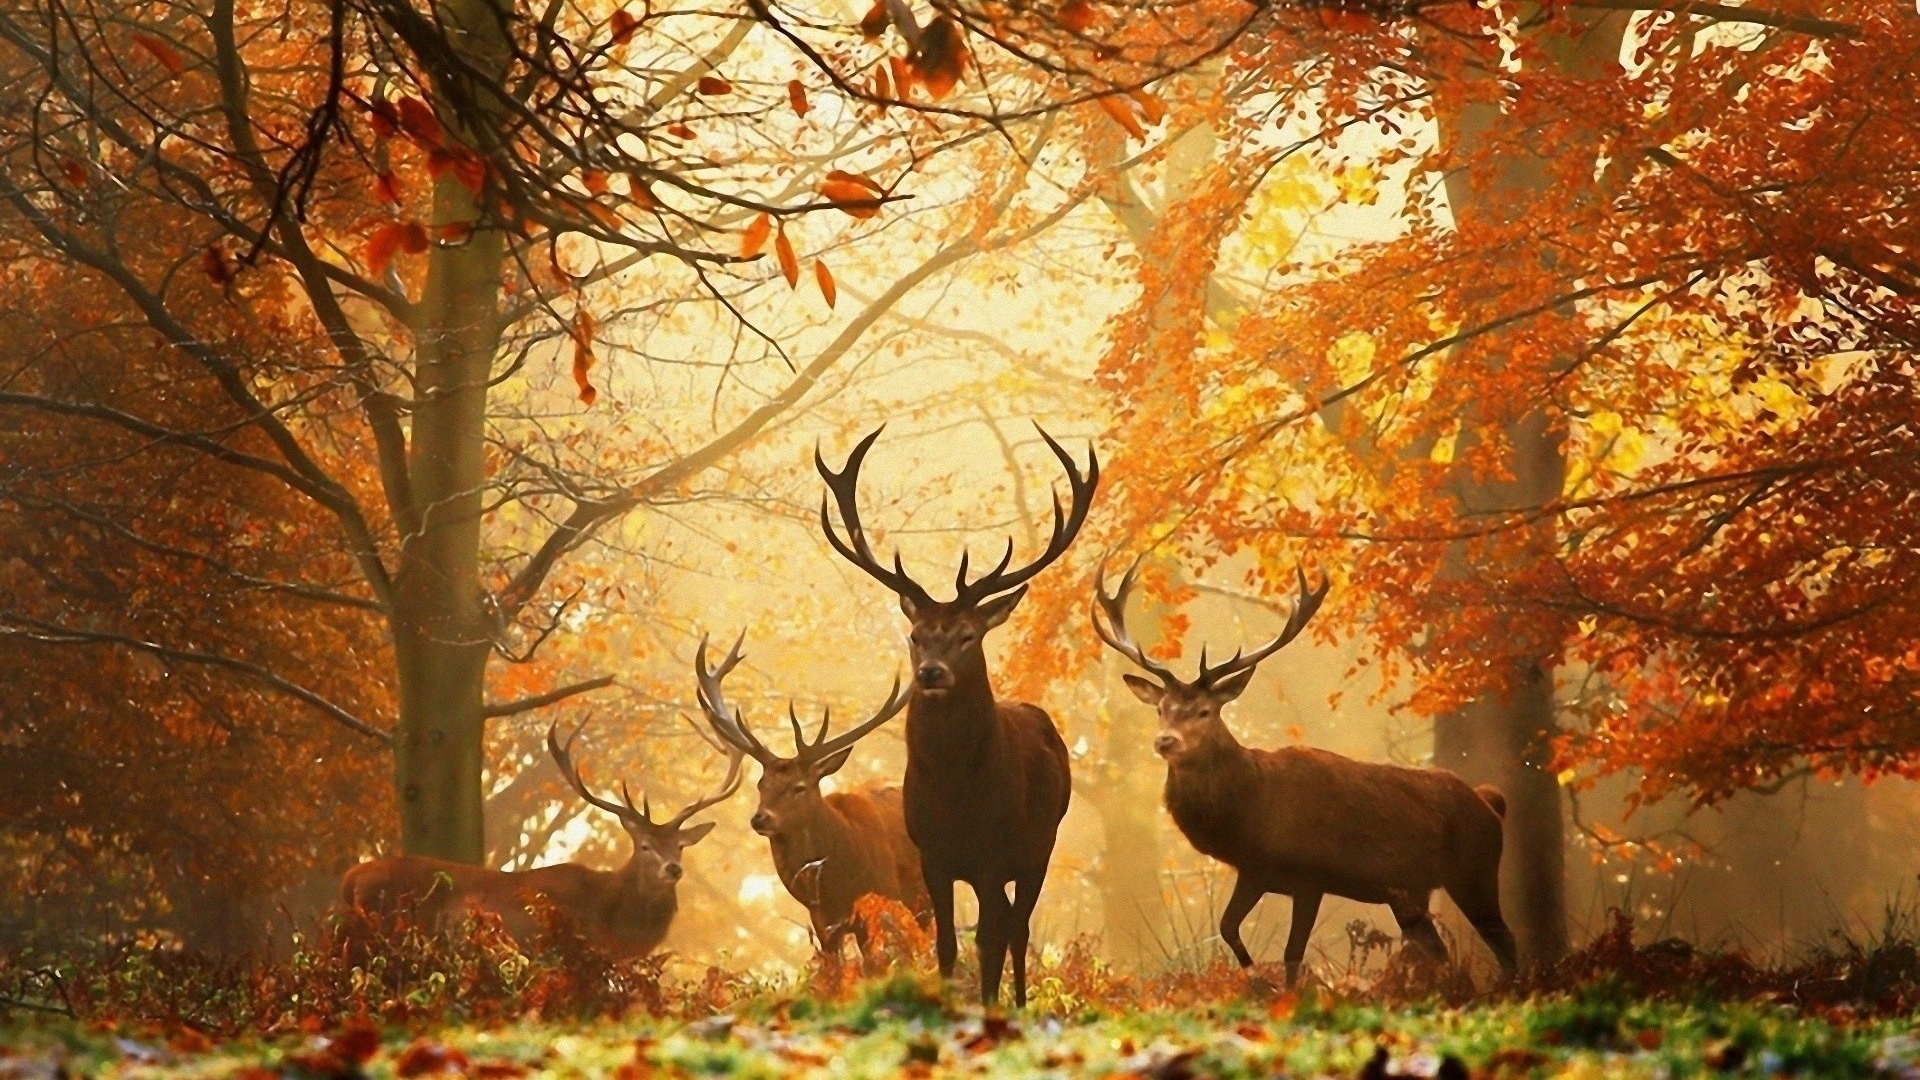 Wild deer, Striking wallpapers, Untamed beauty, Serene wilderness, 1920x1080 Full HD Desktop